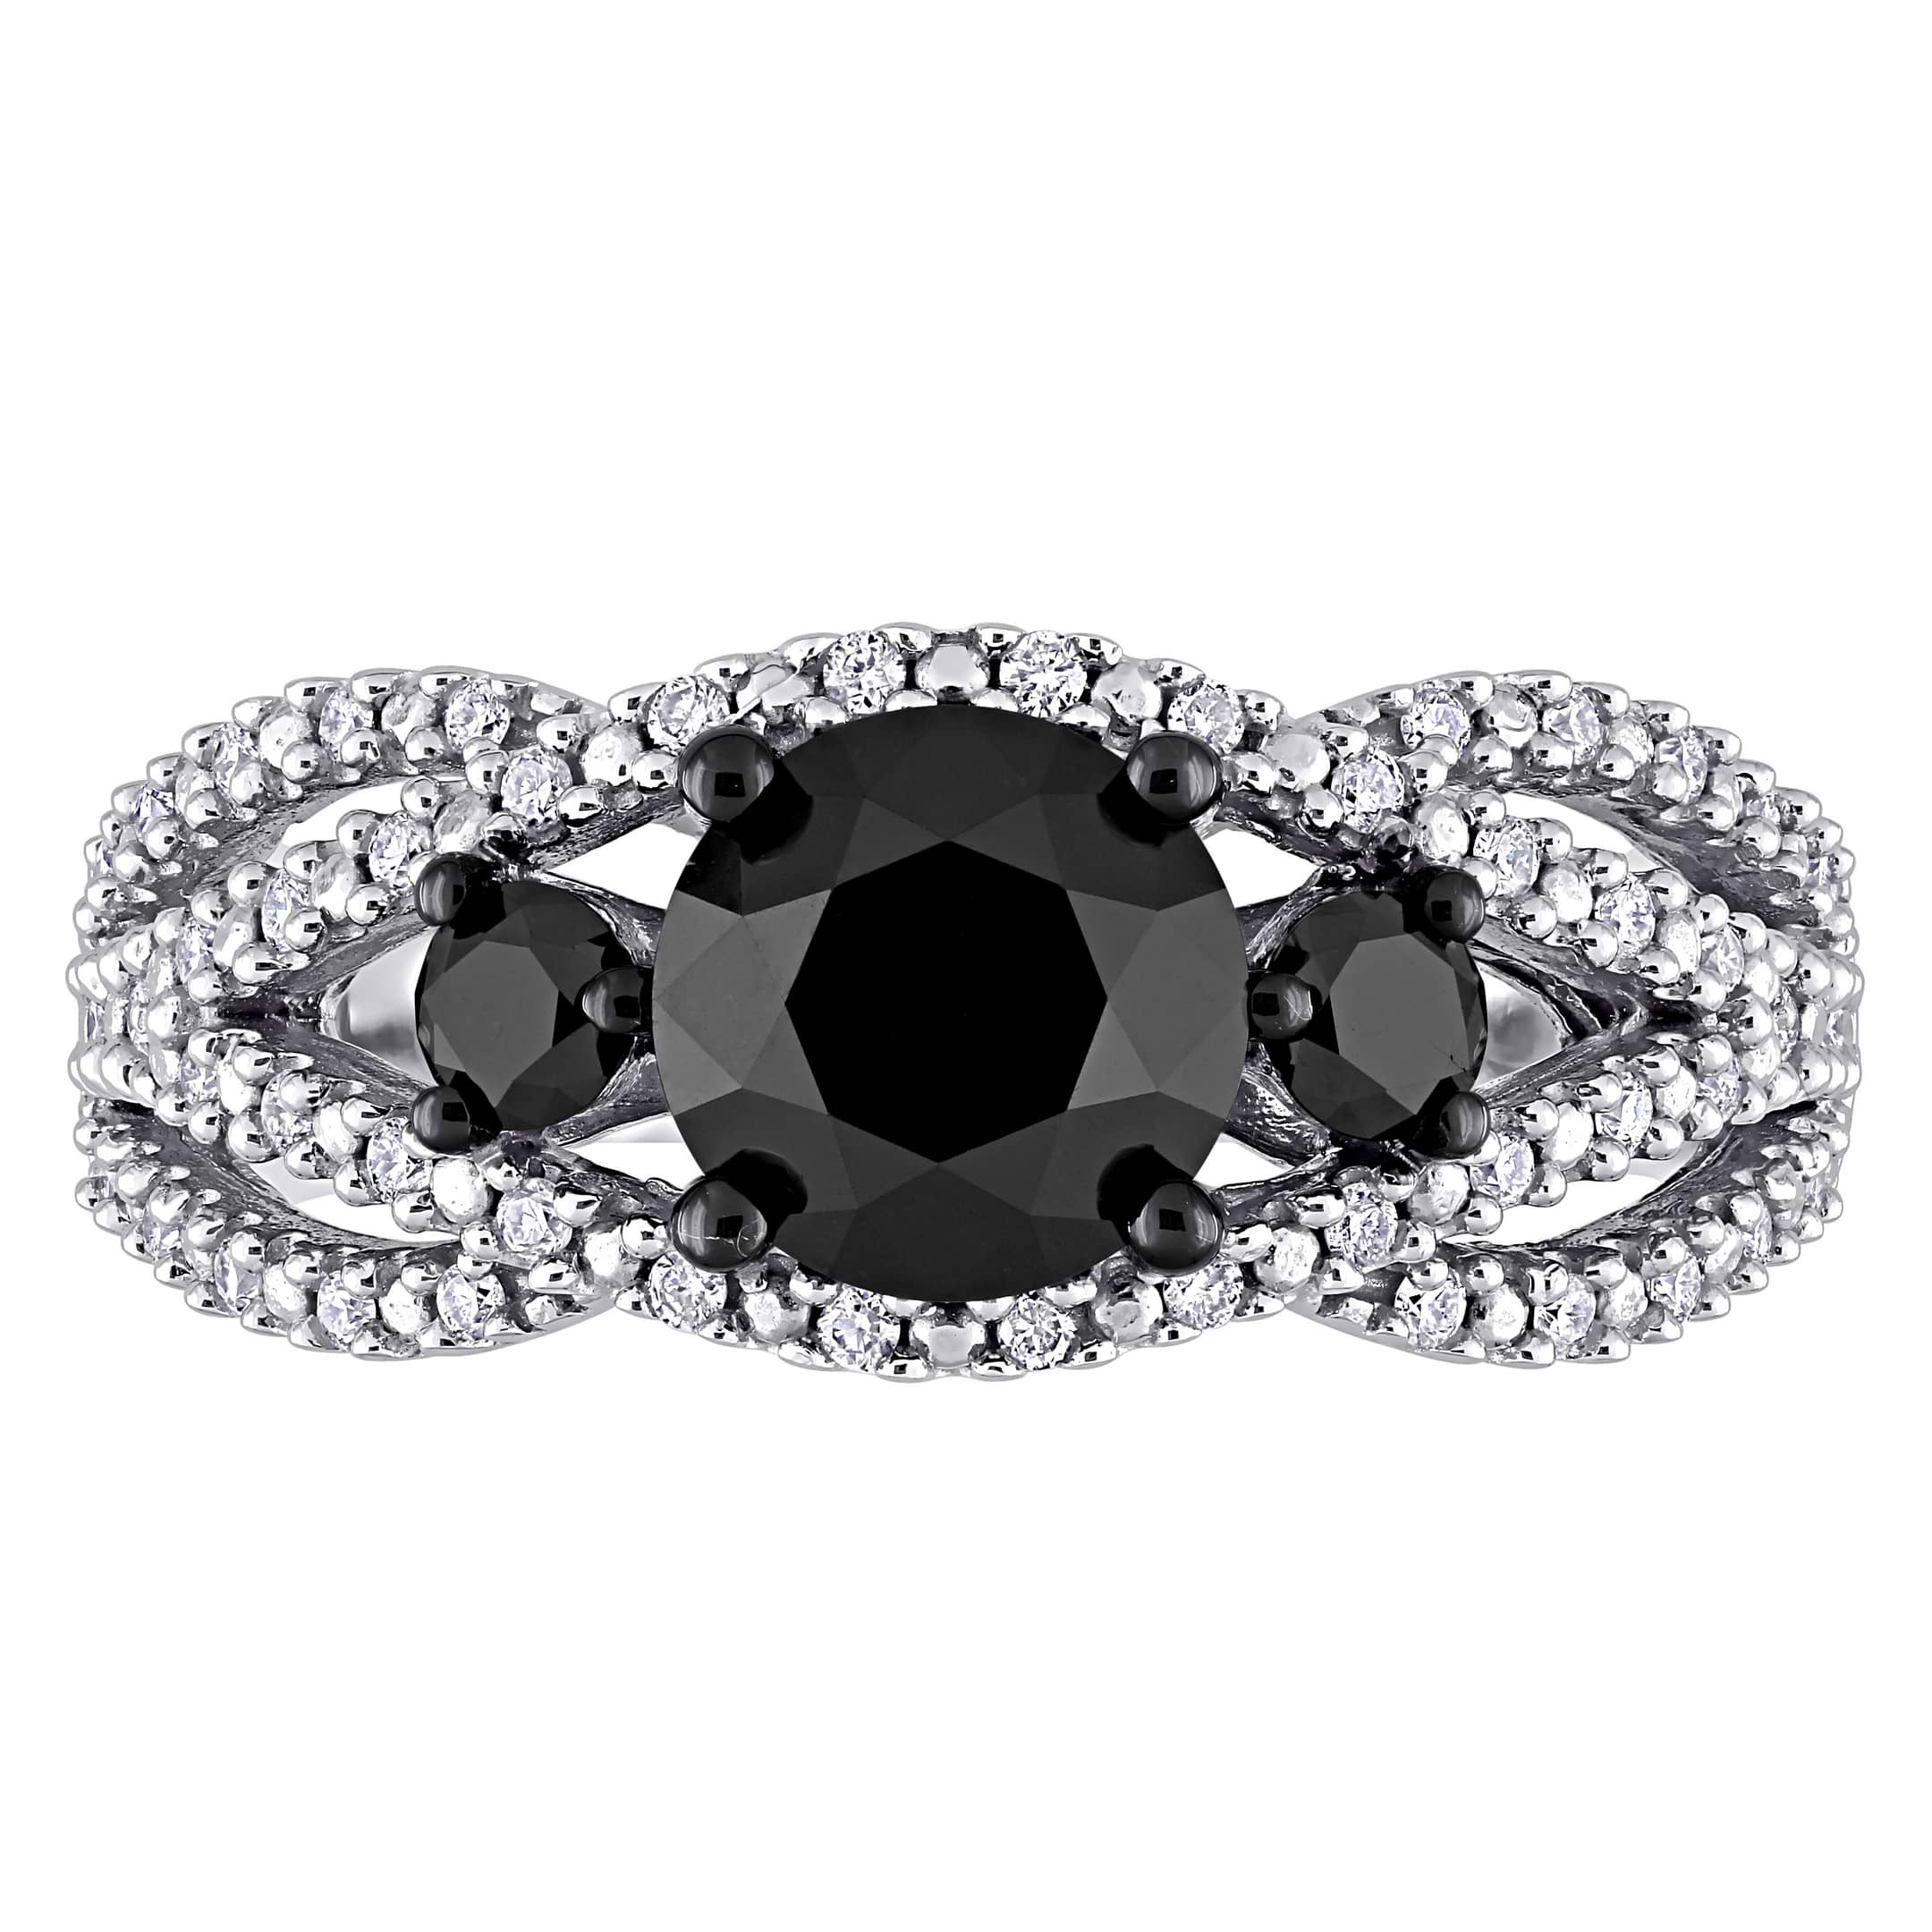 Round Cut Black and White Diamond Fashion Ring 14k White Gold (1.91ct)